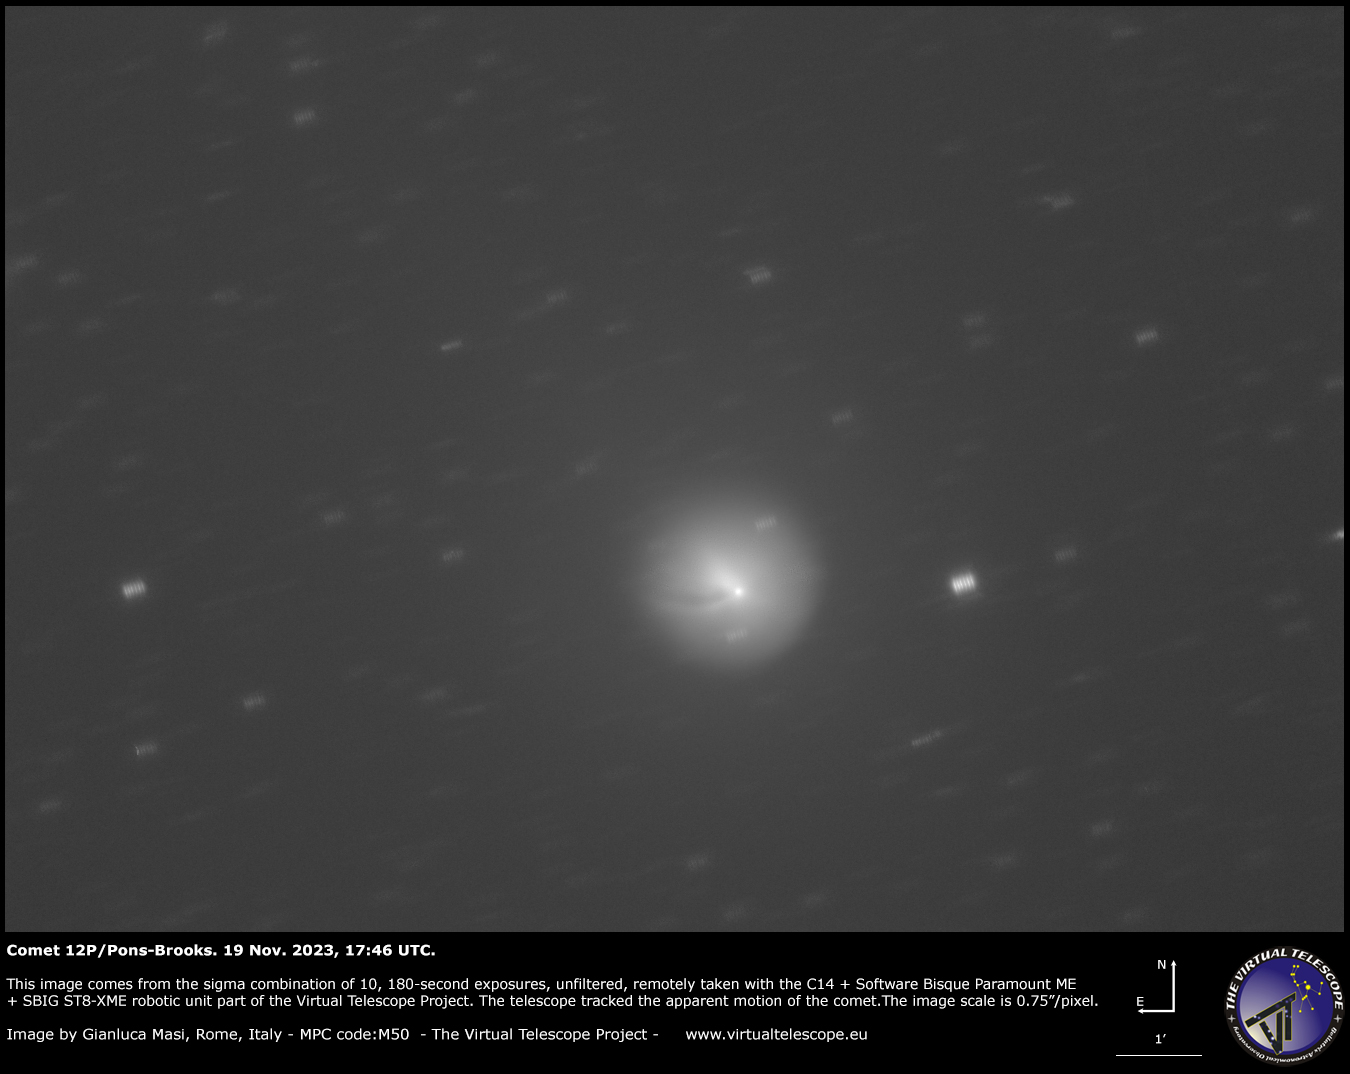 Comet 12P/Pons-Brooks in outburst: 19 Nov. 2023.